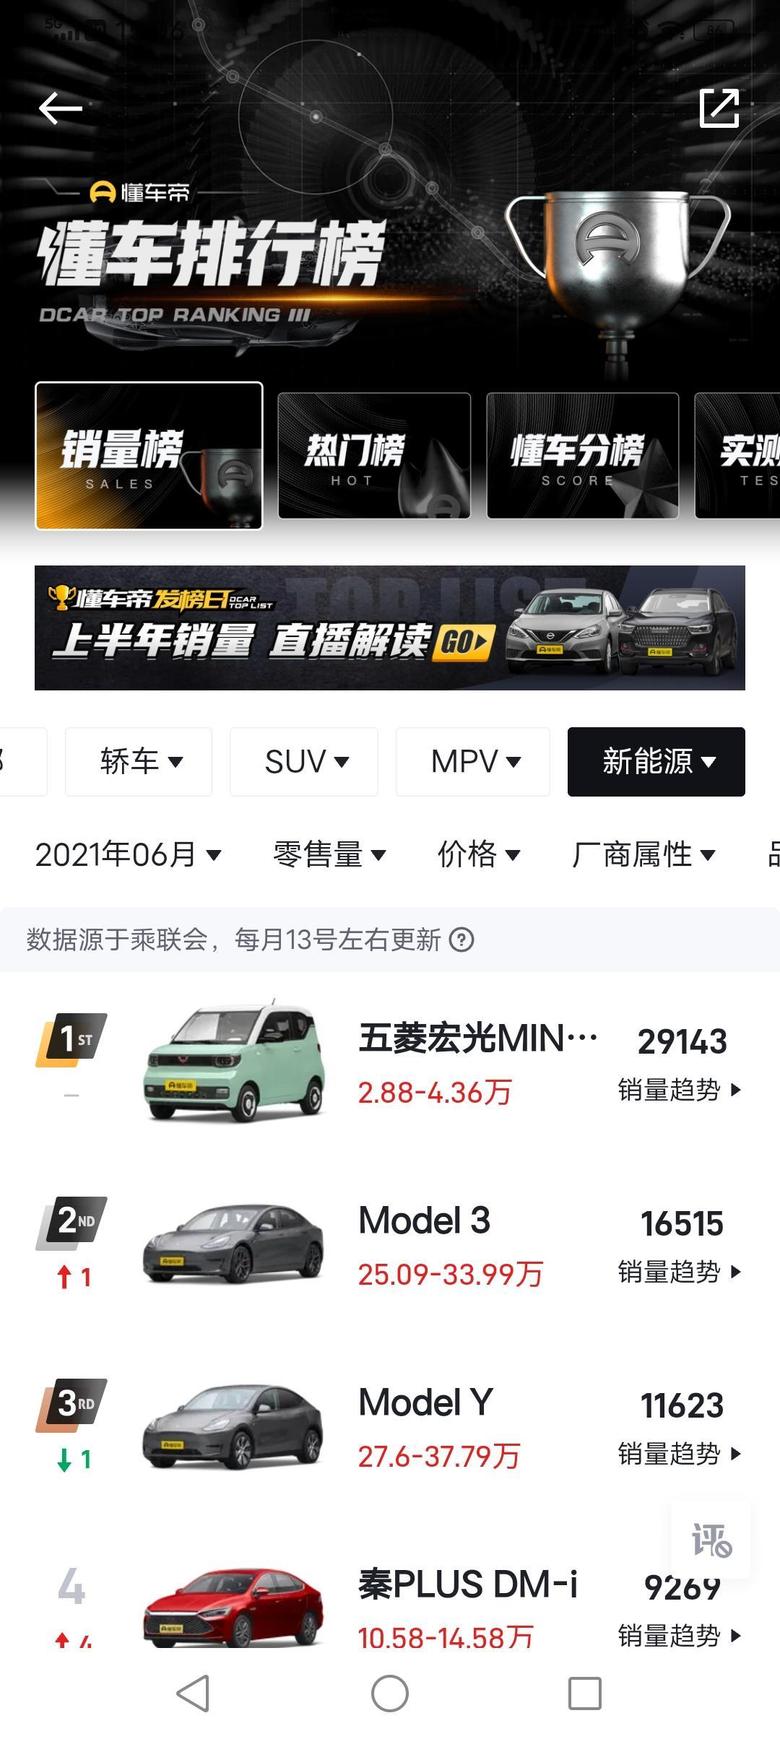 model 3 事实证明中国人还是深爱着，特私啦的，销量增增日上，到底是好事还是坏事呢